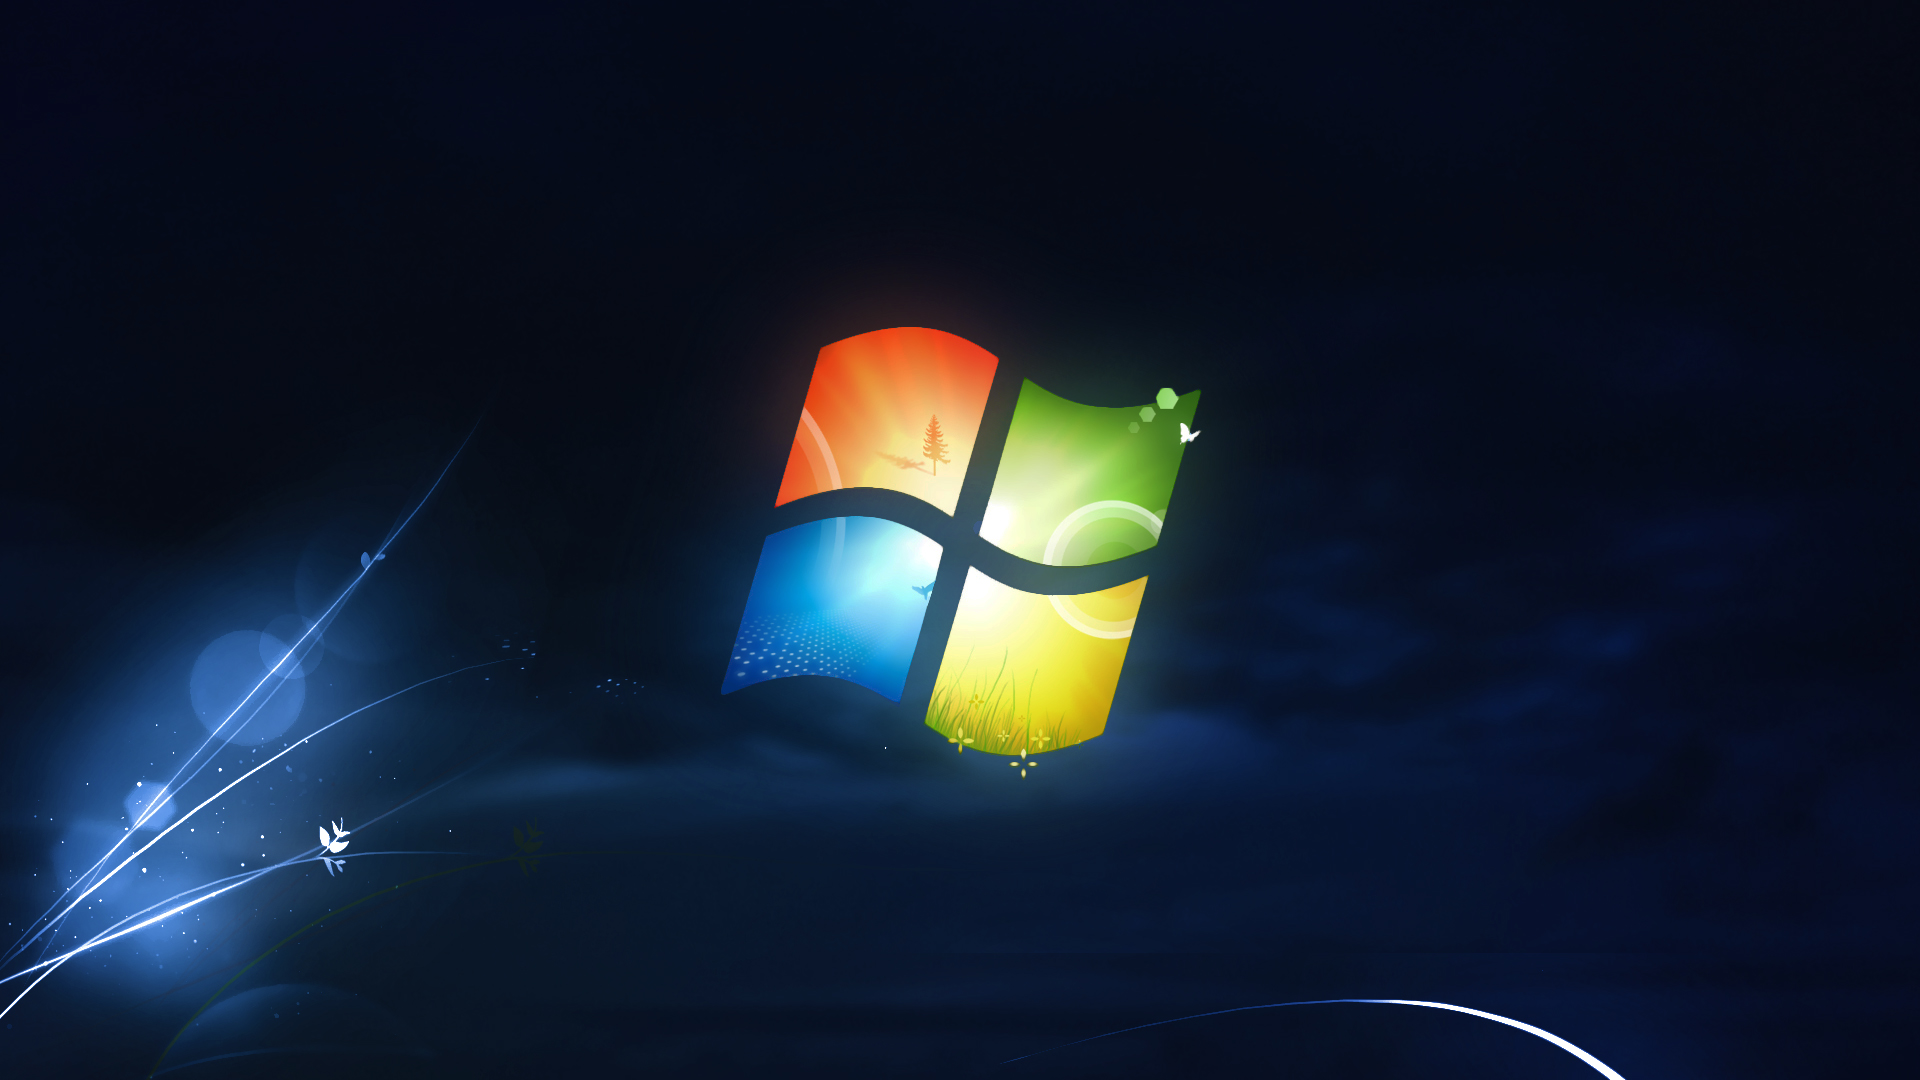 Microsoft Desktop Background Wallpaper9